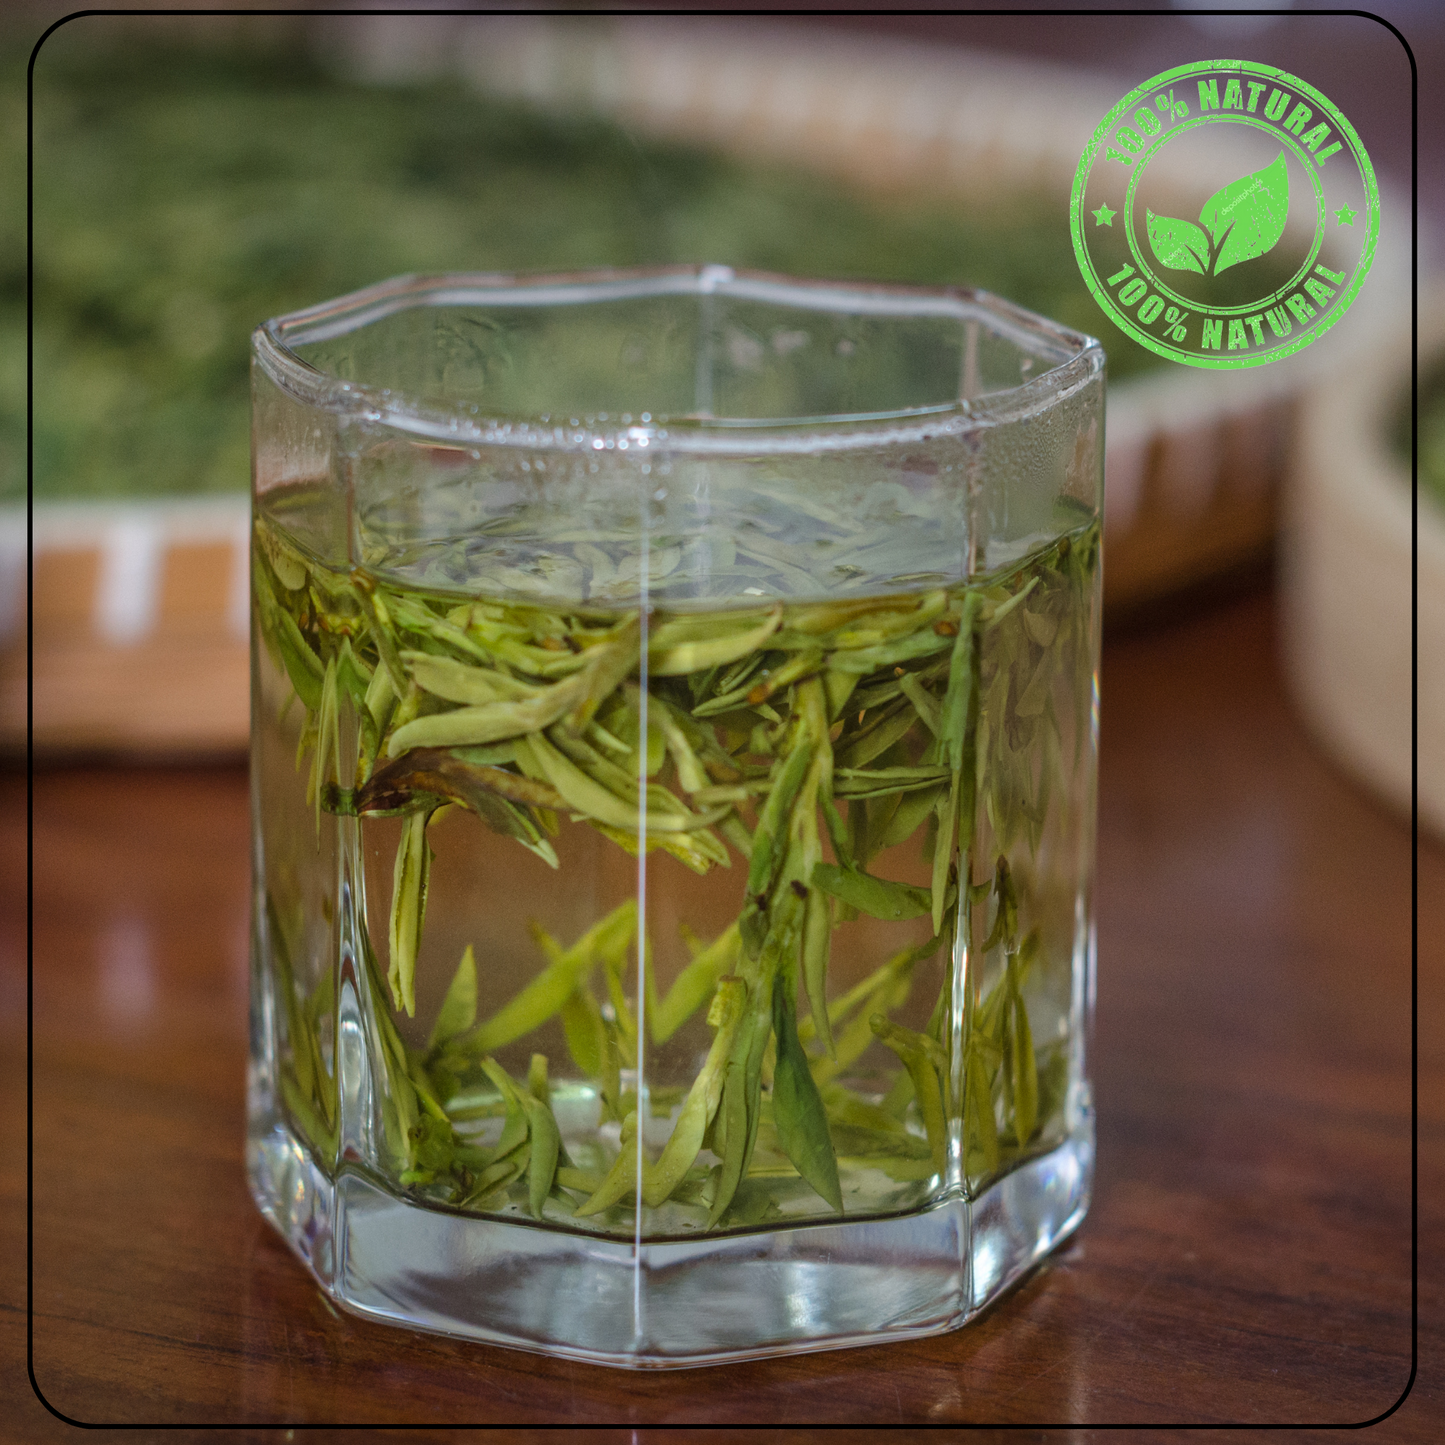 ENERGY China Longjing Leaf - A Pan-Roasted Green Tea for Energy and Health - Radhikas Fine Teas and Whatnots